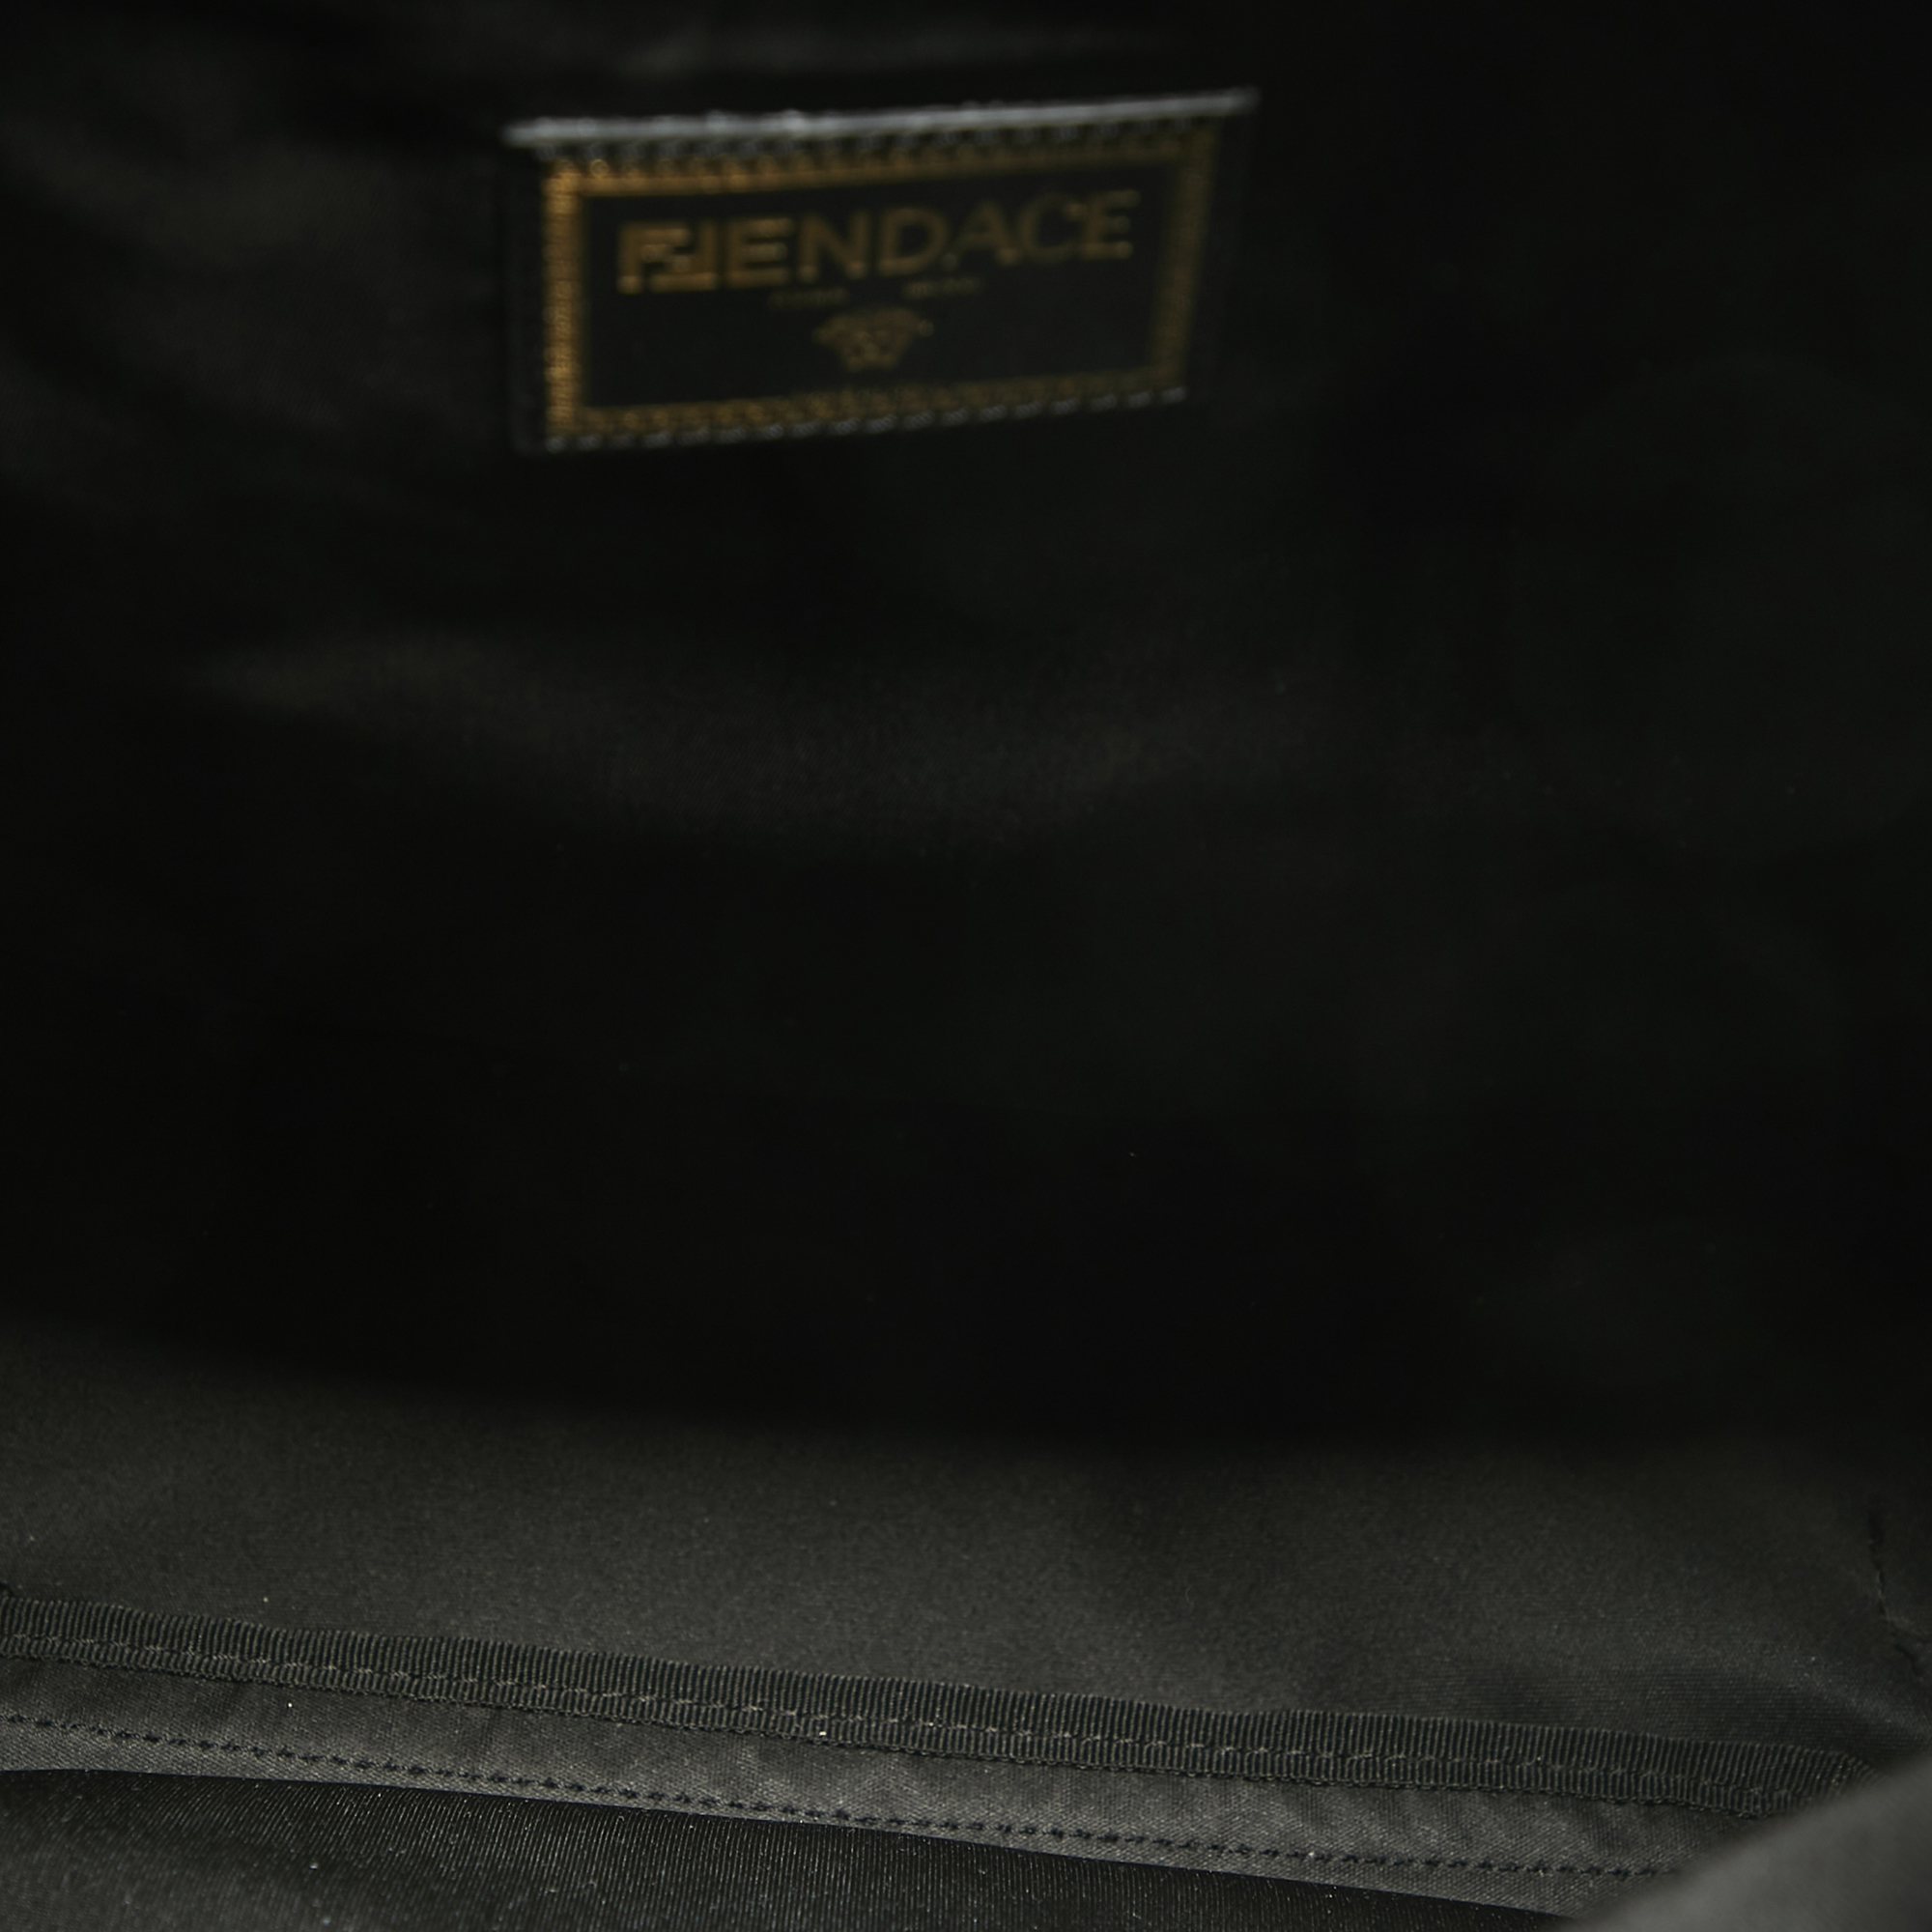 Fendi X Versace Multicolor Printed Barocco Nylon Backpack